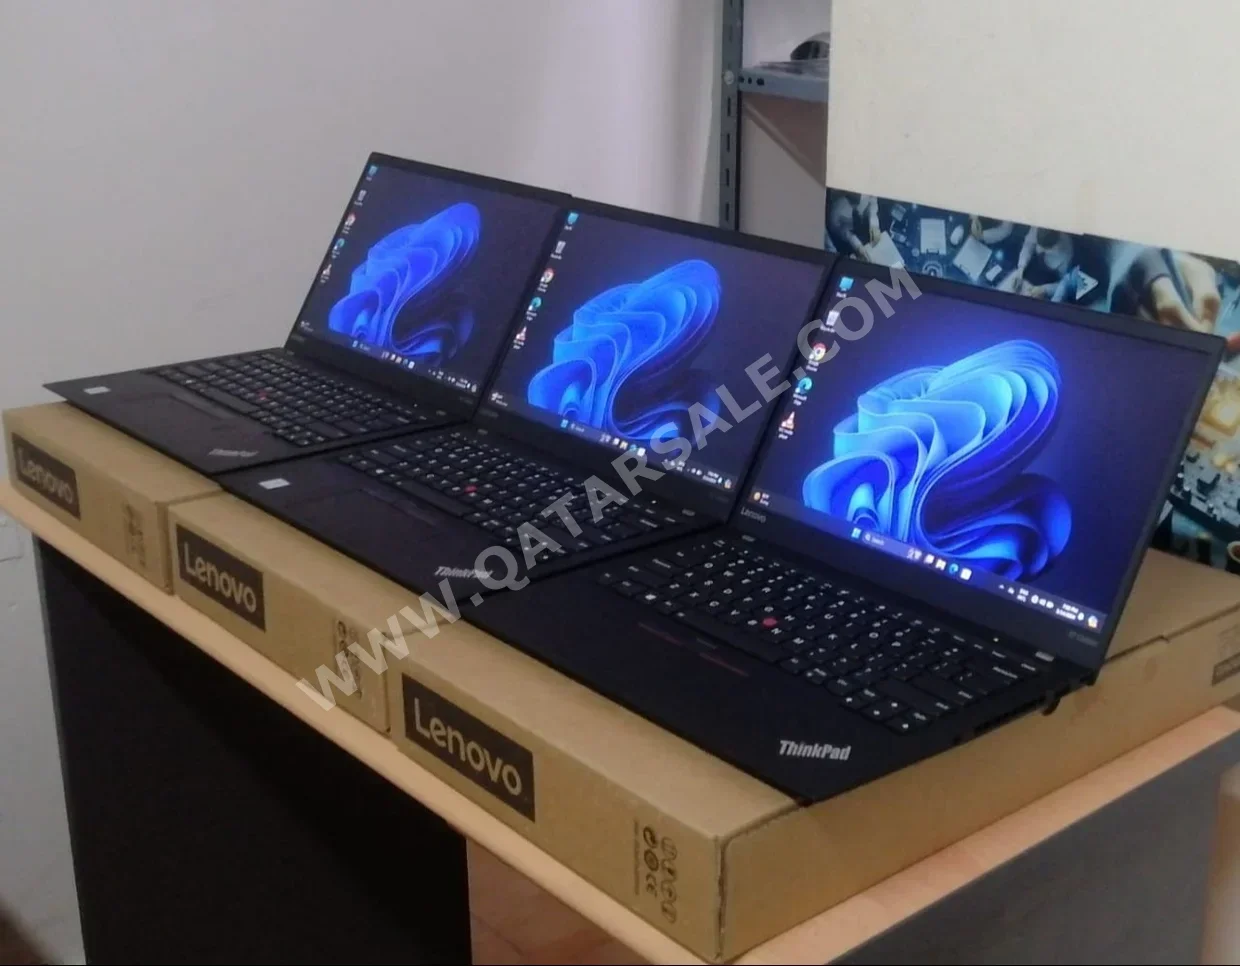 Laptops Lenovo  - ThinkPad  - Black  - Windows 11  - Intel  - Core i5  -Memory (Ram): 8 GB